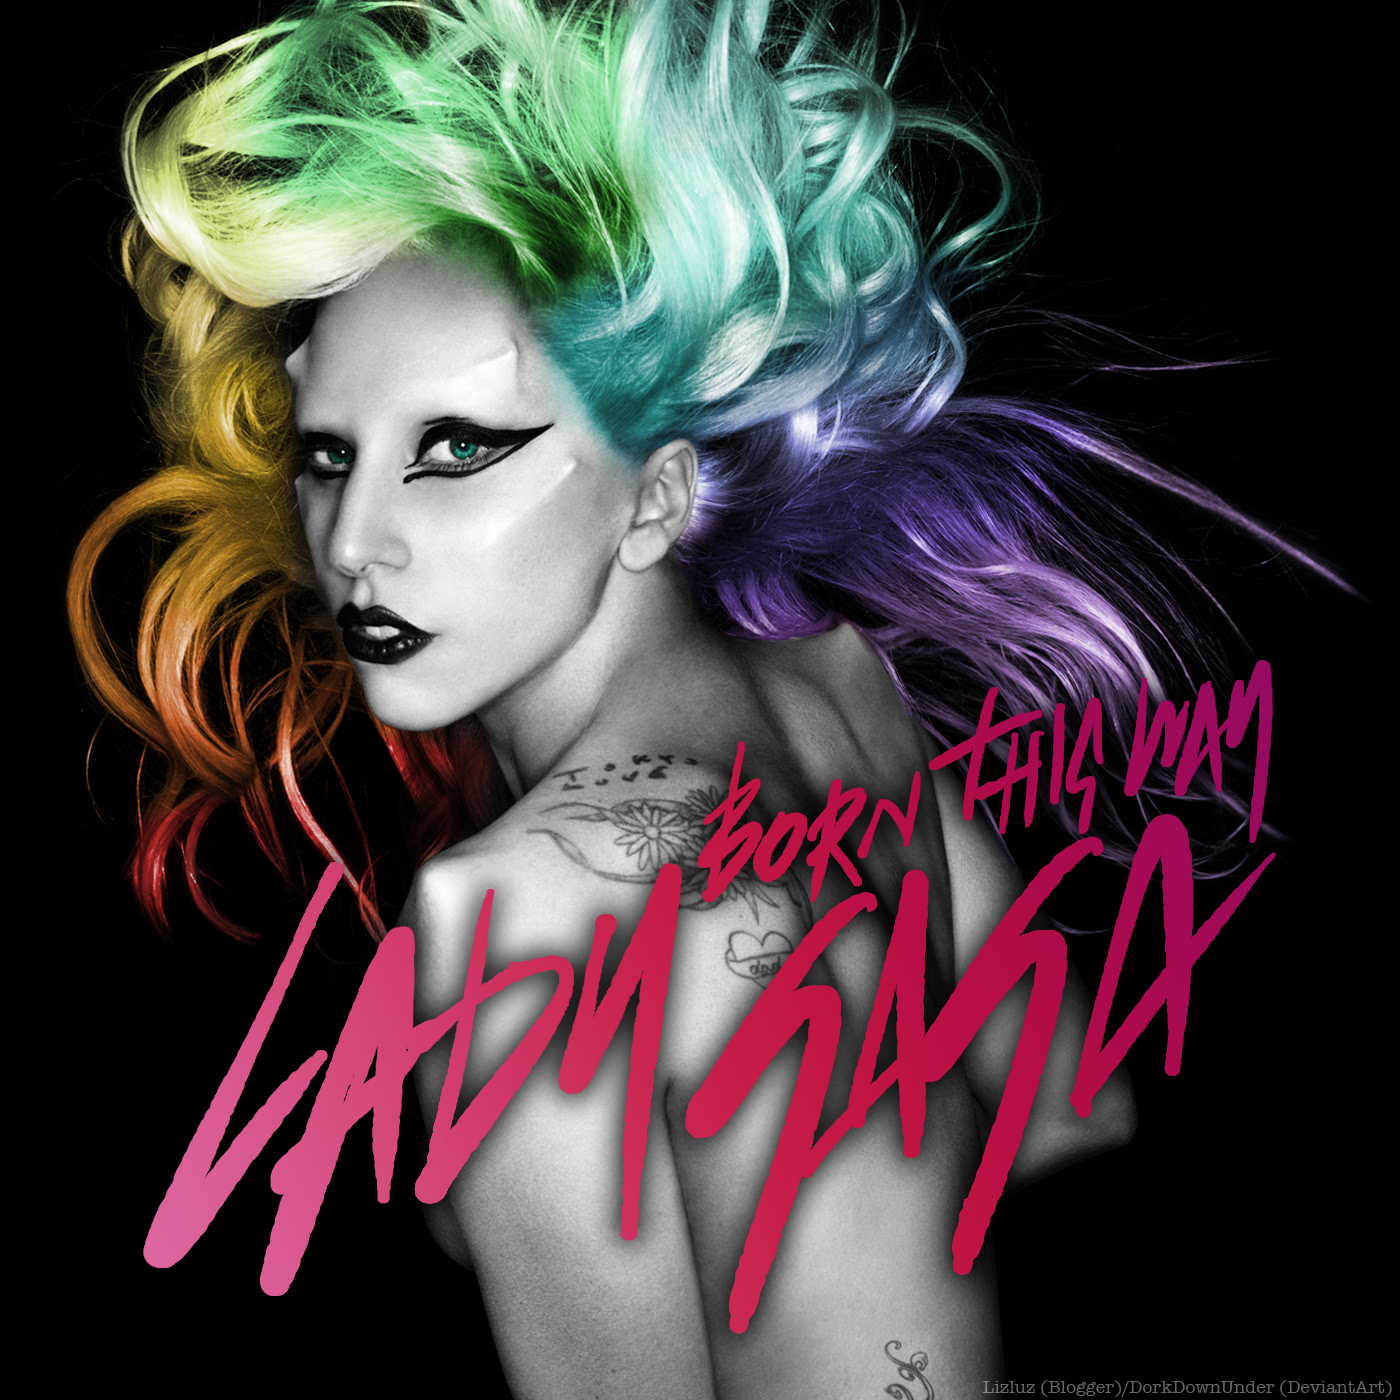 Liz's Blog of Stardoll: I've gone Gaga! Haha!